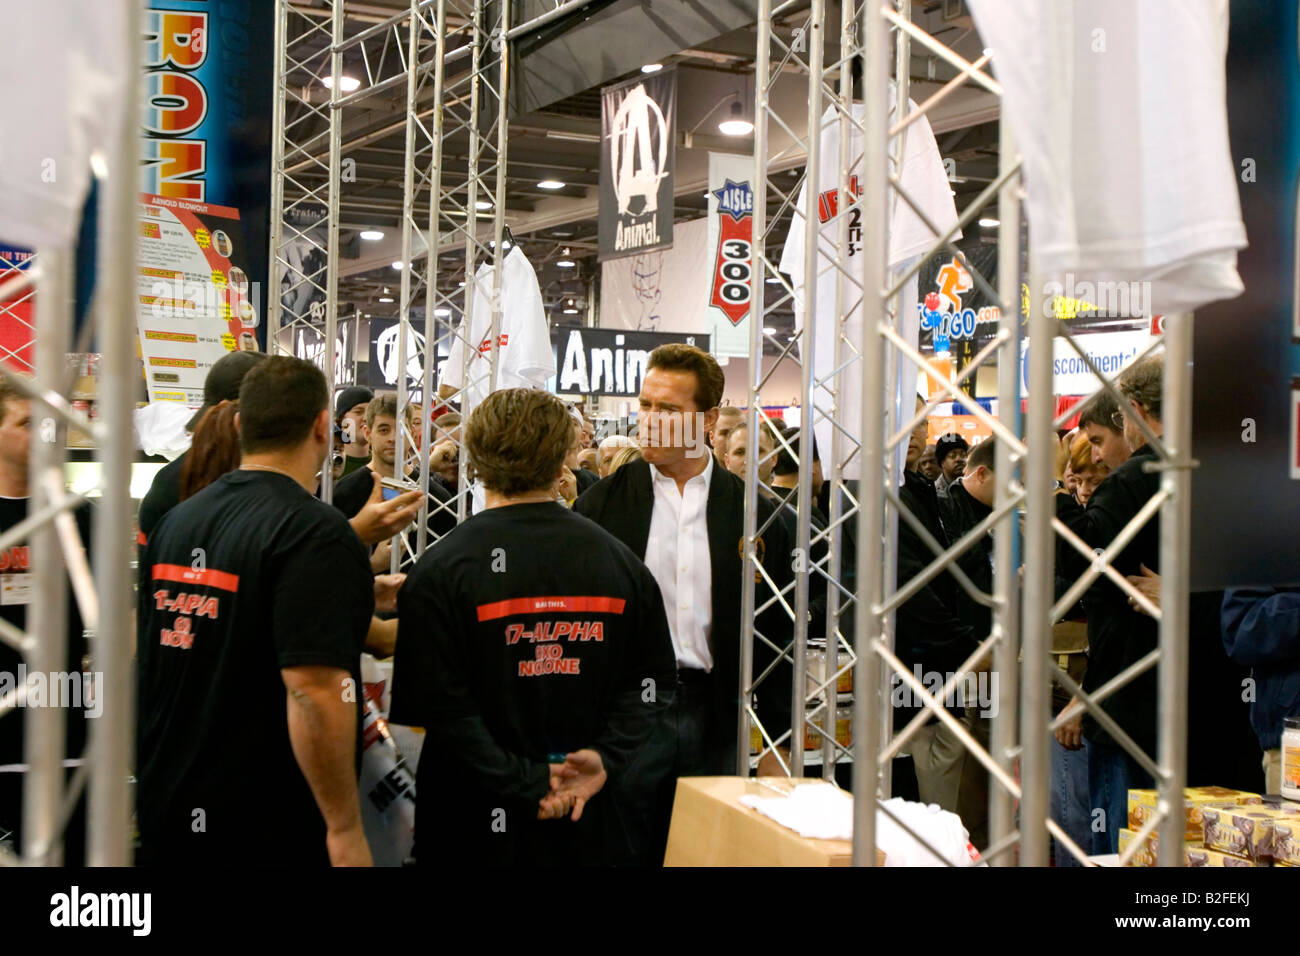 Arnold Schwarzenegger Classic auf Arnold classic Bodybuilding show Stockfoto